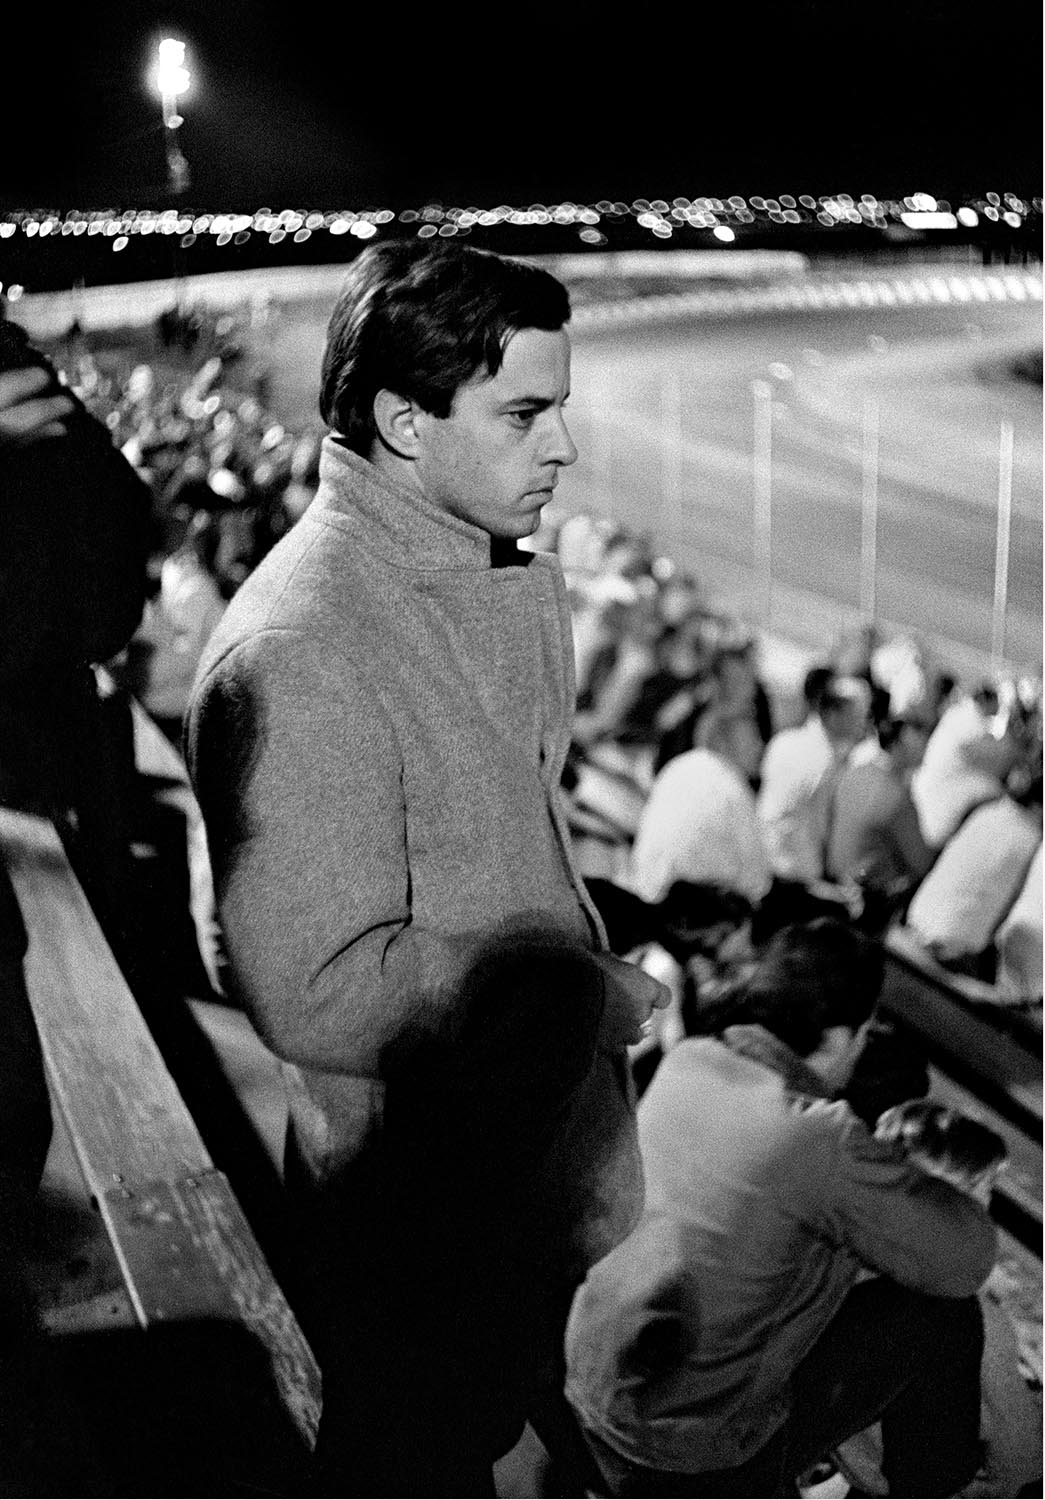  KEN PRICE   Watching Bengston race, Ascot Park Raceway, Gardena, California, 1963  